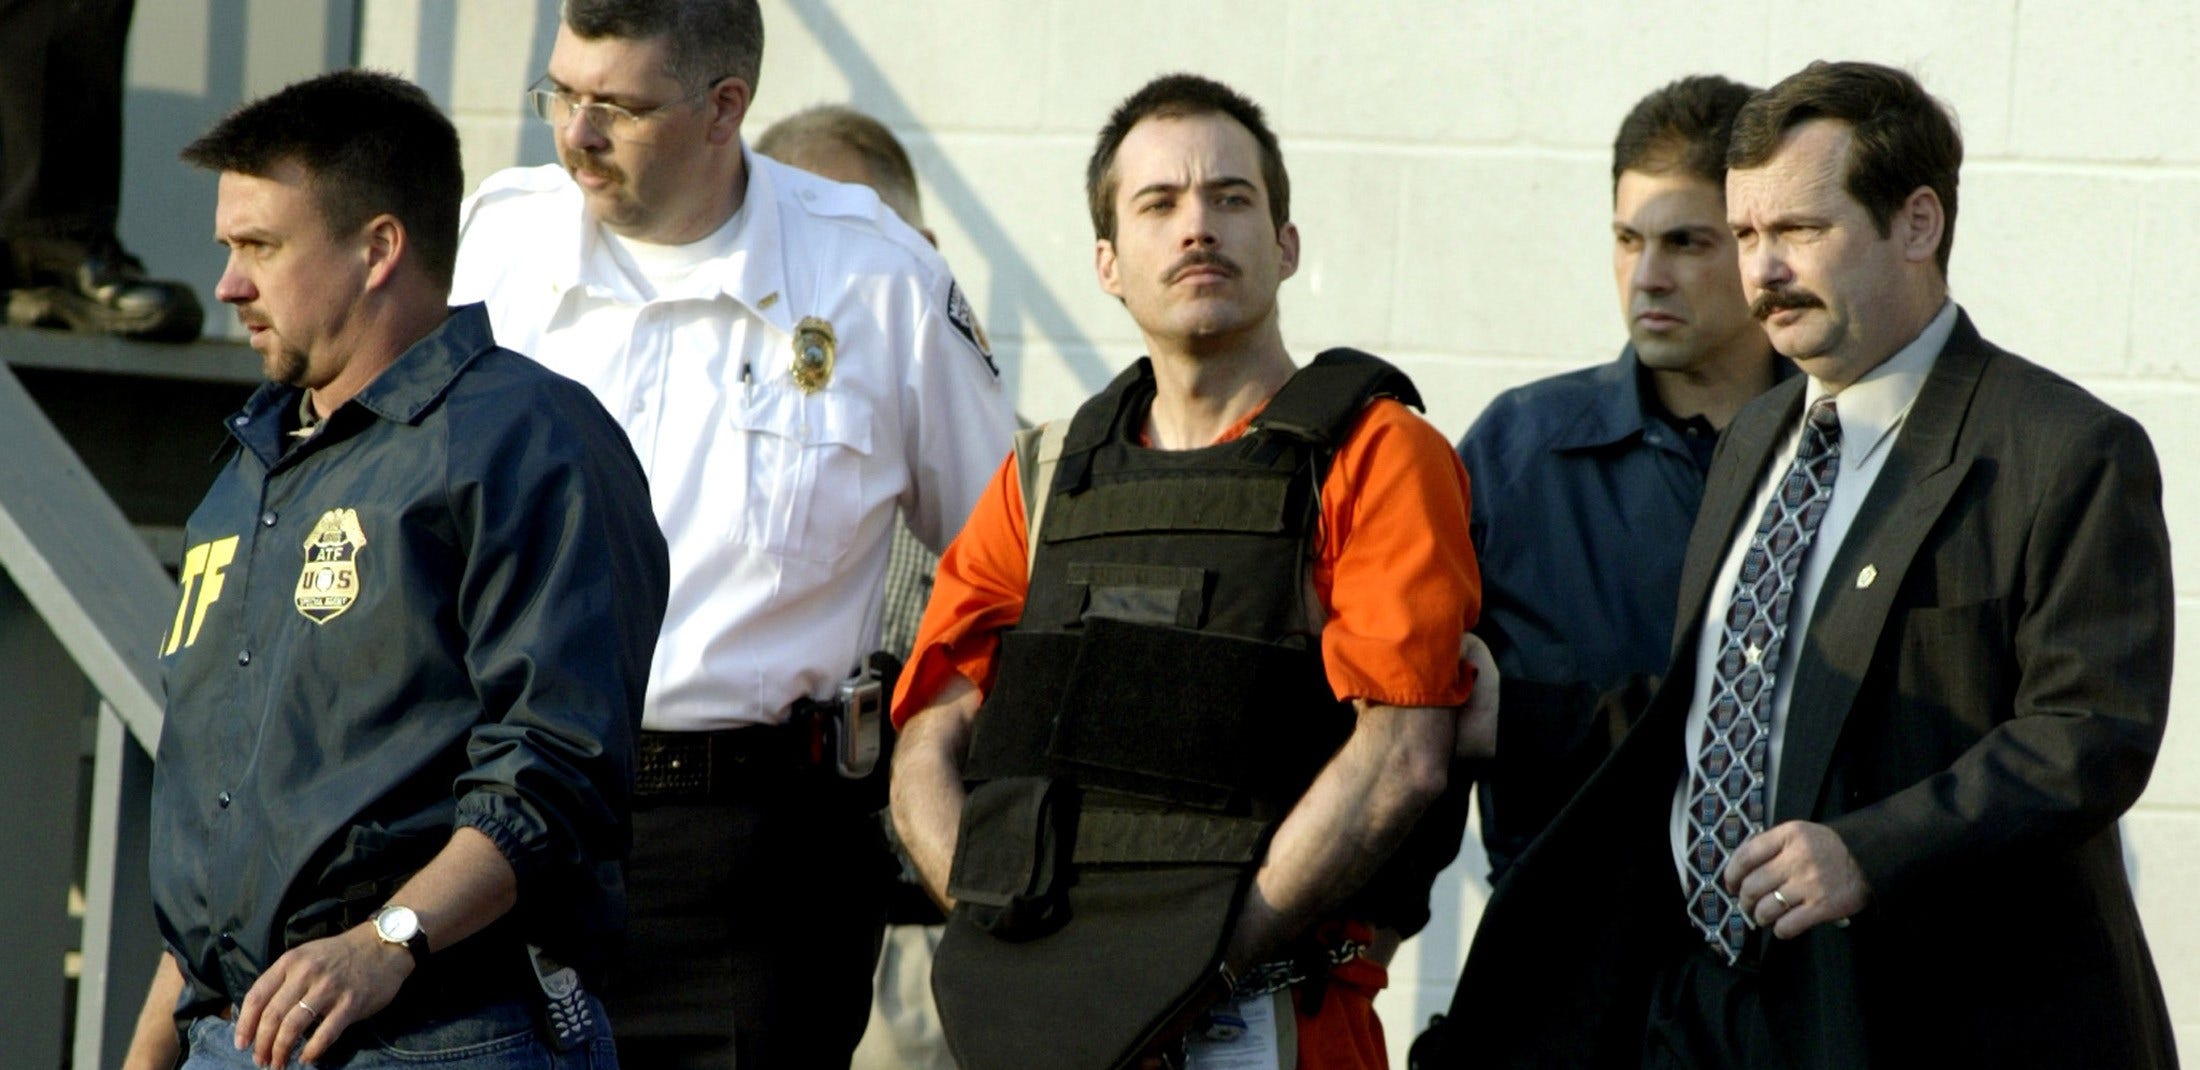 Appeals court upholds Atlanta Olympics bomber Eric Rudolph life sentences